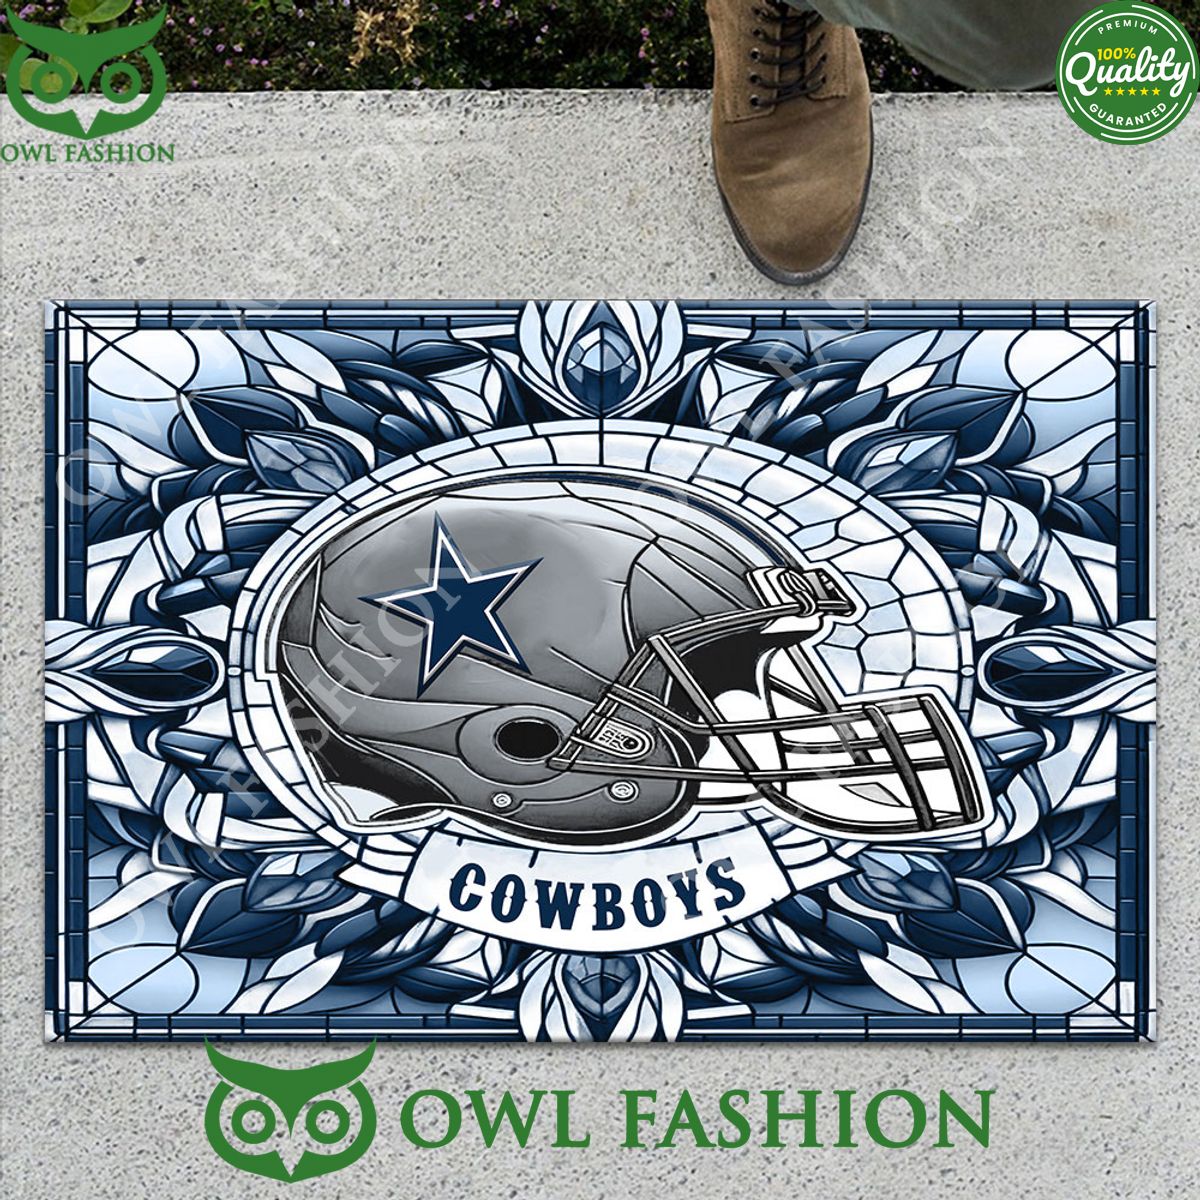 nfl dallas cowboys stained glass football helmet doormat 1 E0voY.jpg